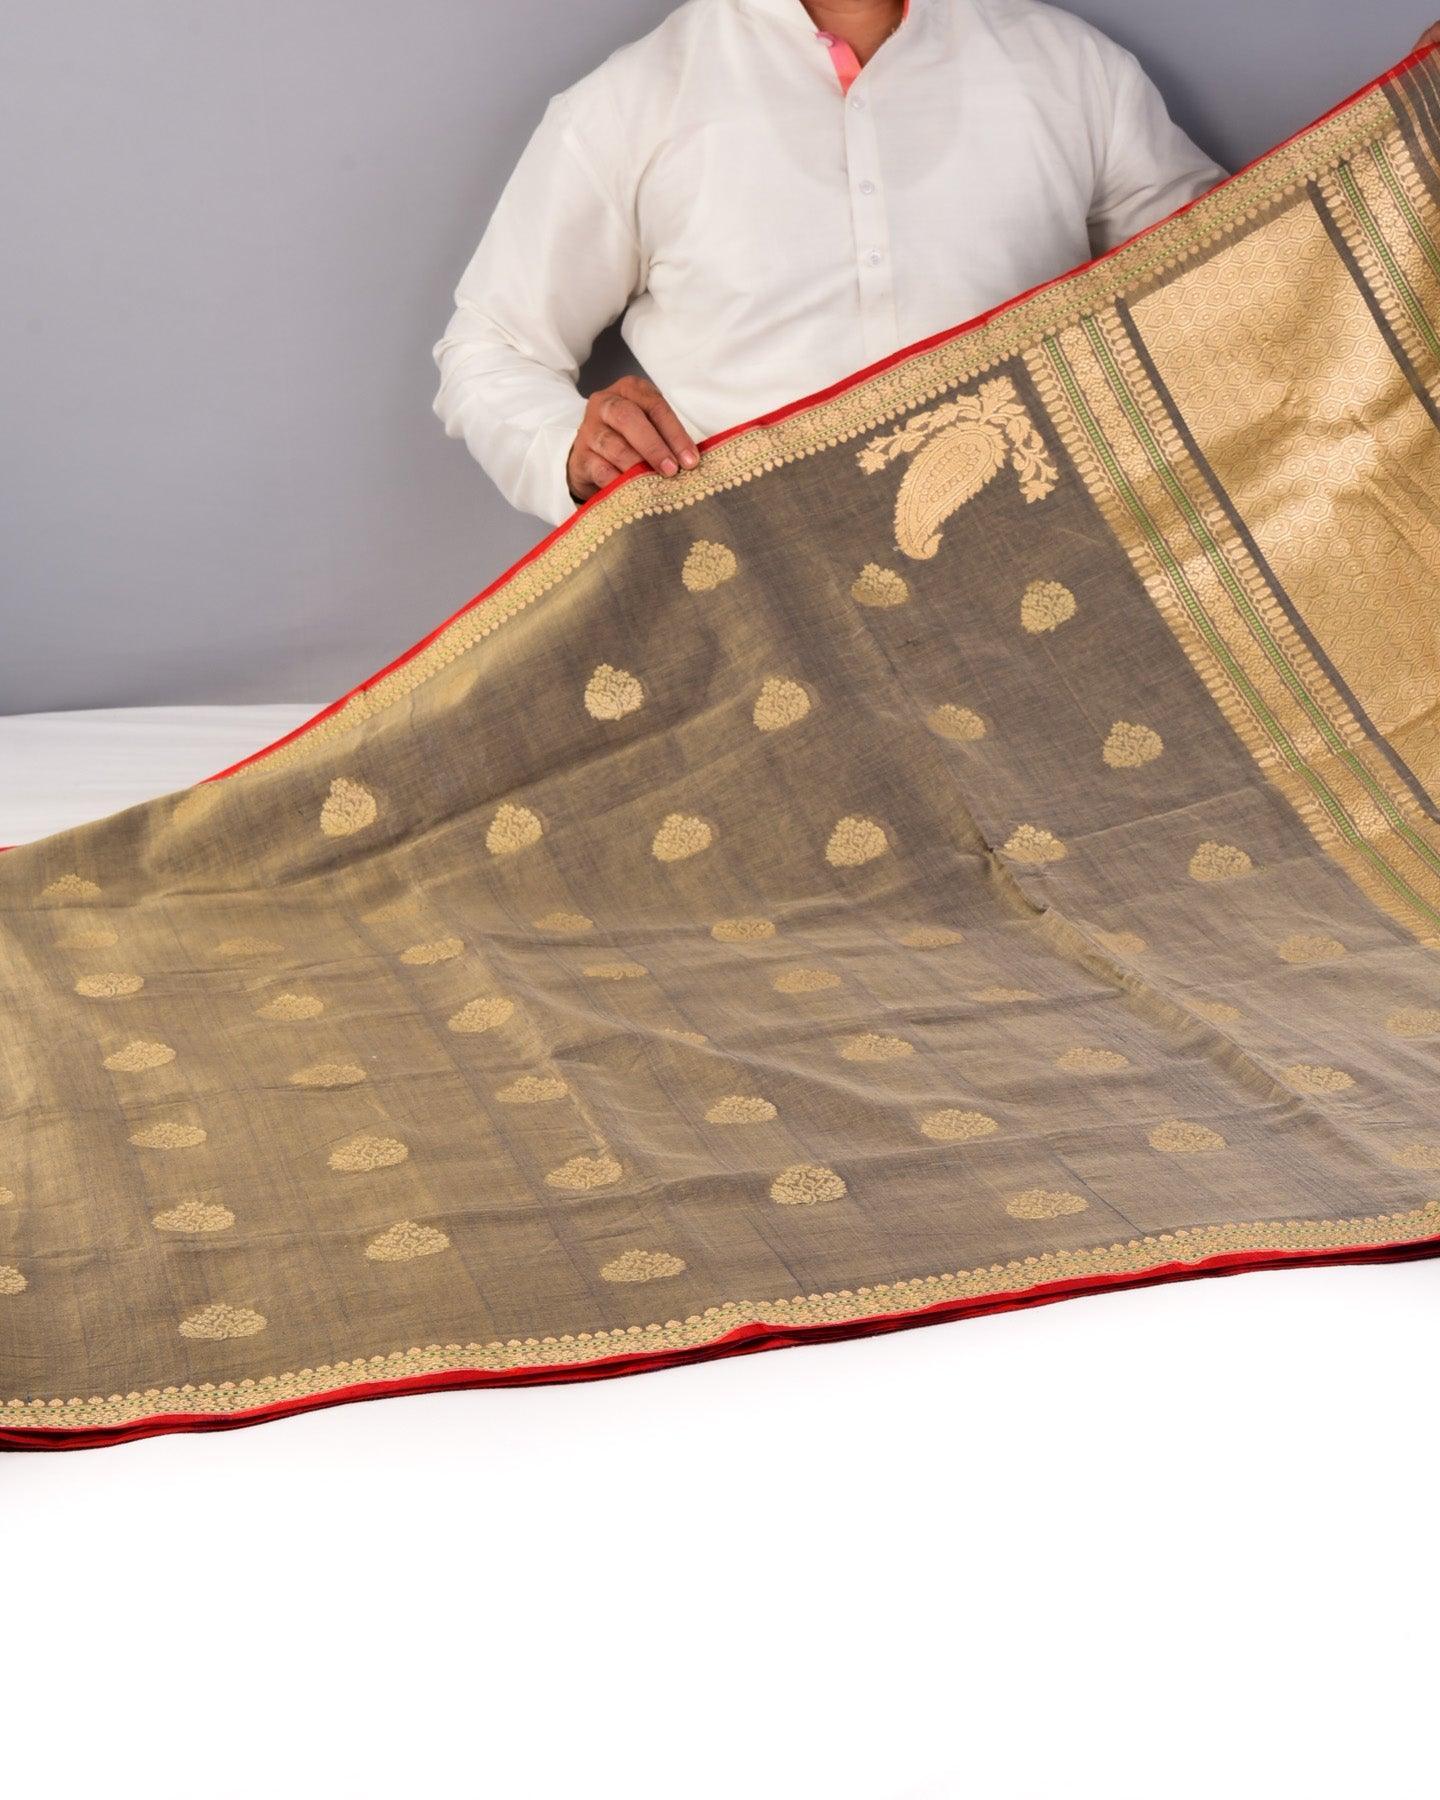 Gray Banarasi Buti Ektara Cutwork Brocade Handloom Cotton Saree - By HolyWeaves, Benares